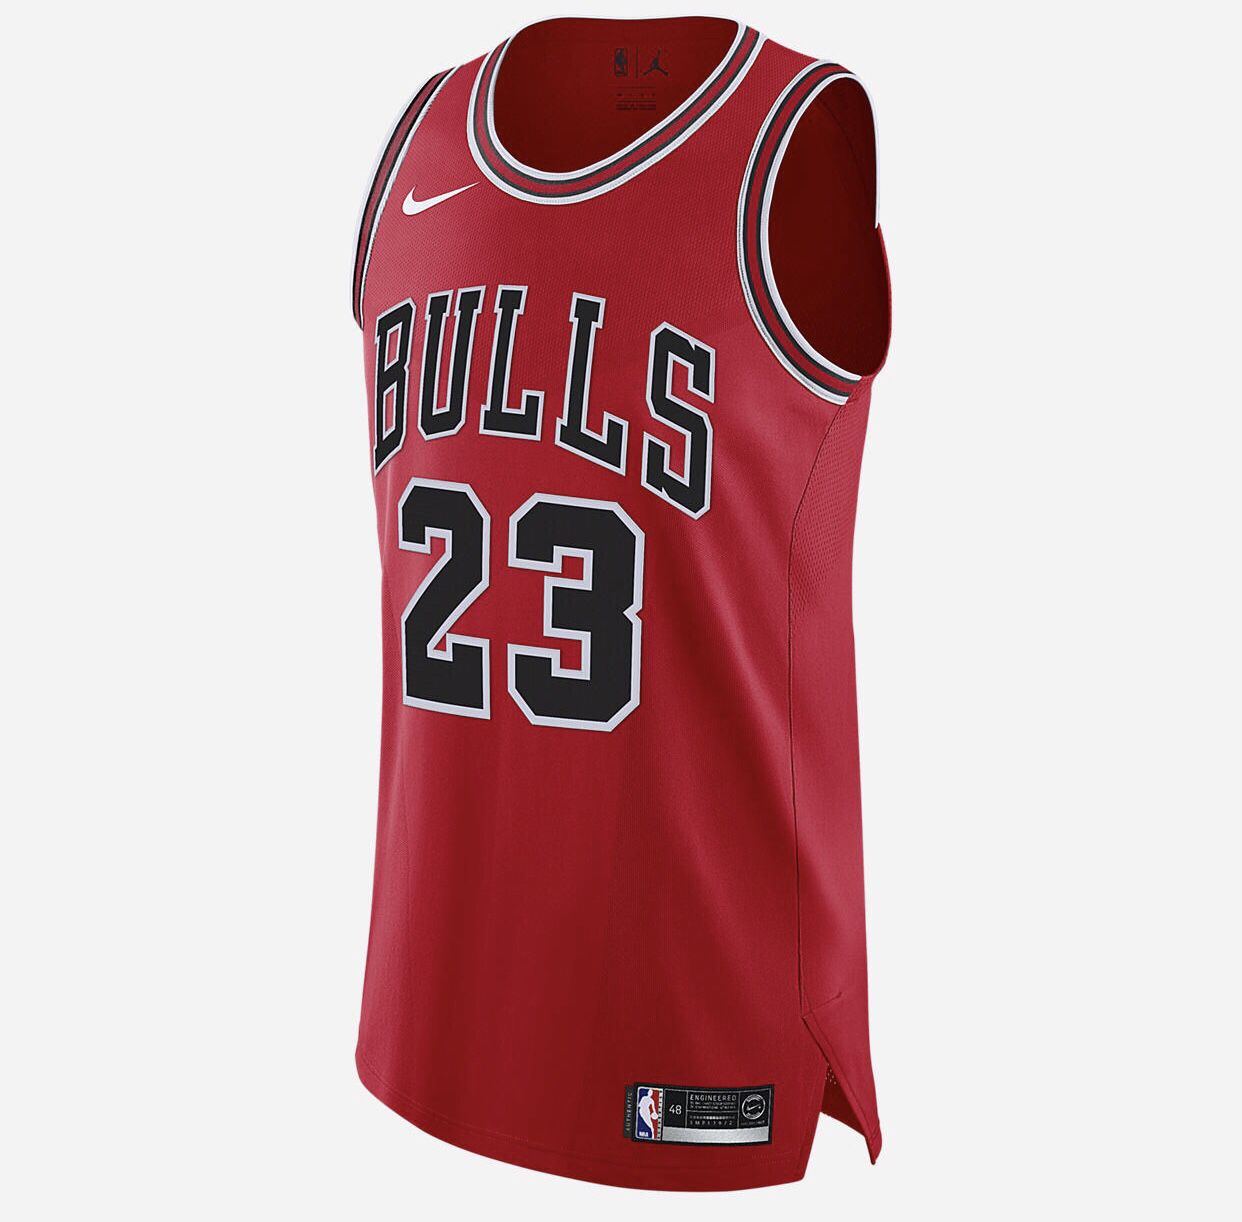 Chicago Bulls Michael Jordan Jersey for Sale in Peoria, AZ - OfferUp